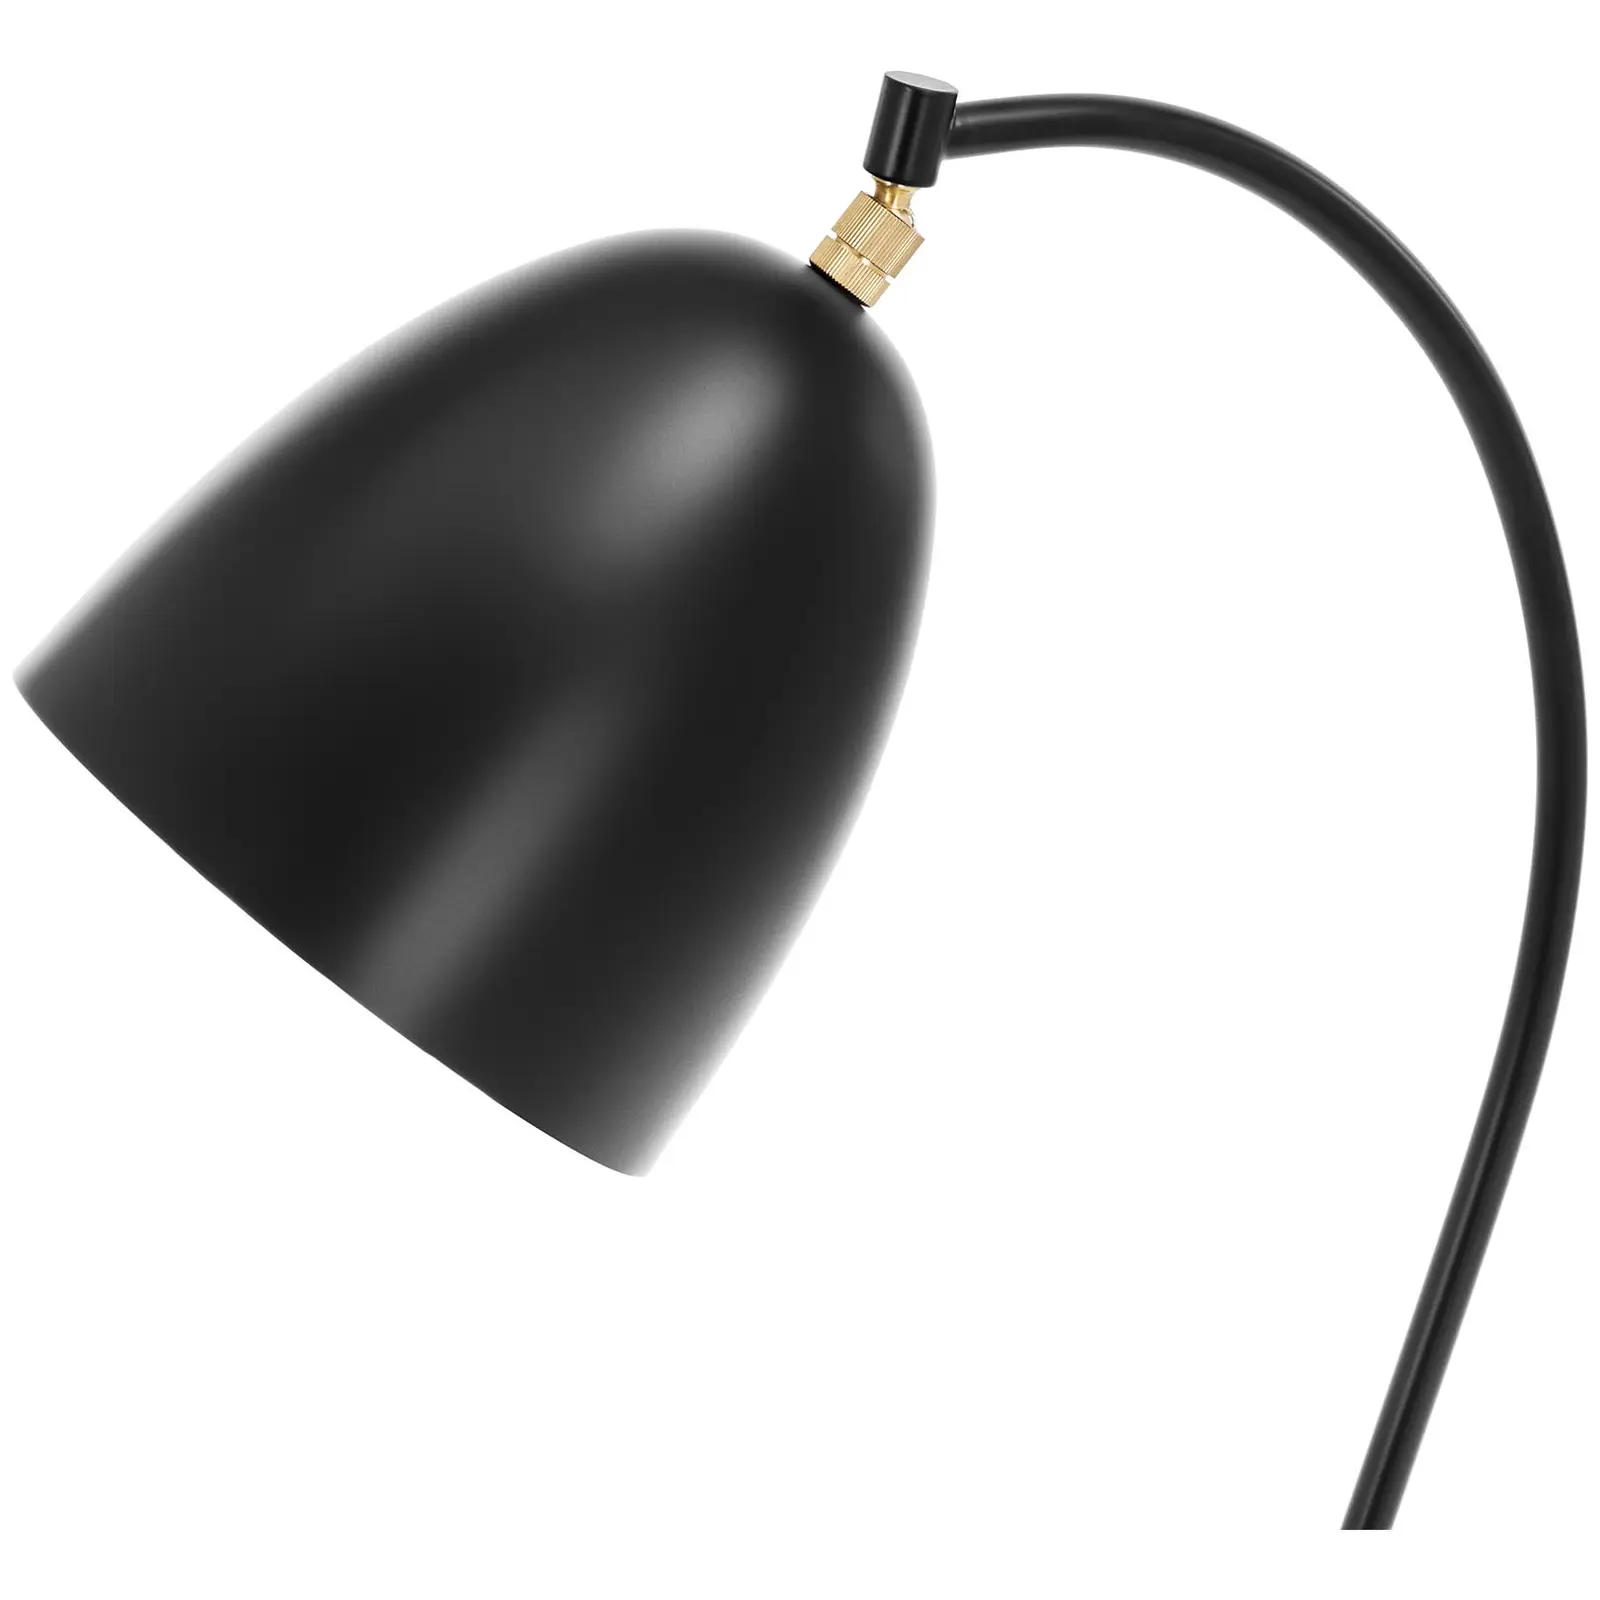 Дъгова подова лампа - подвижен метален абажур - 40 W - височина 125 cm